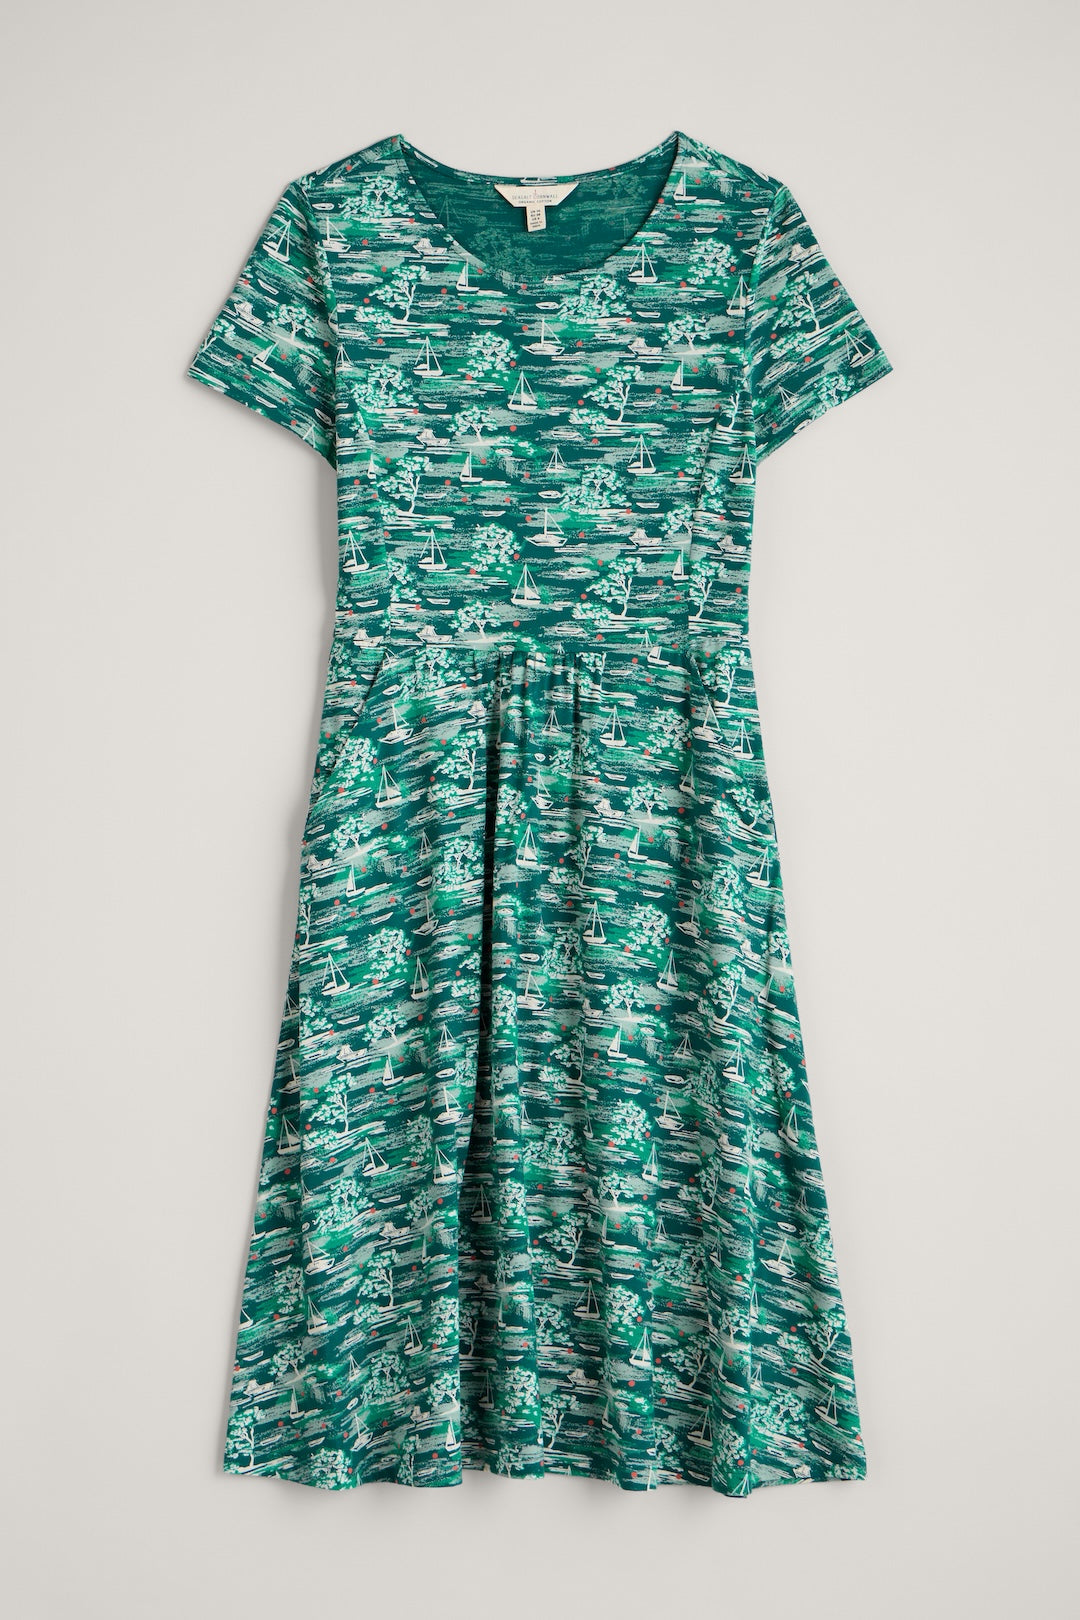 Seasalt April Dress (2)